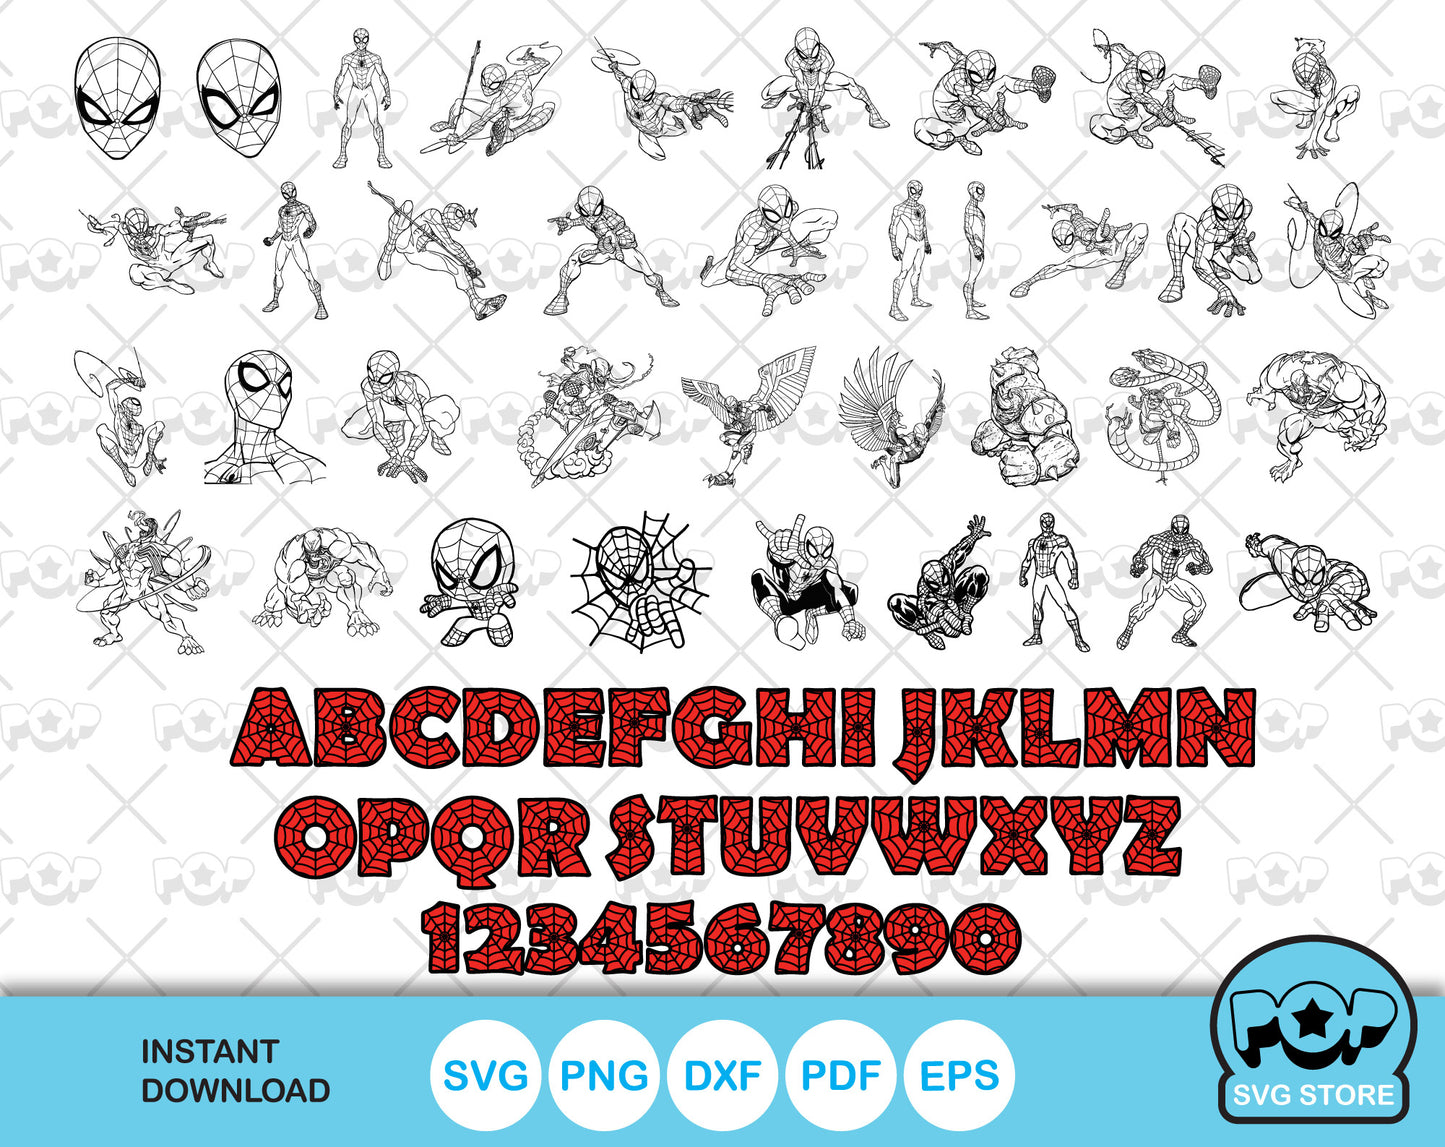 Spider-Man 100 cliparts bundle + alphabet, Spiderman SVG cut files for Cricut / Silhouette, PNG, DXF, instant download